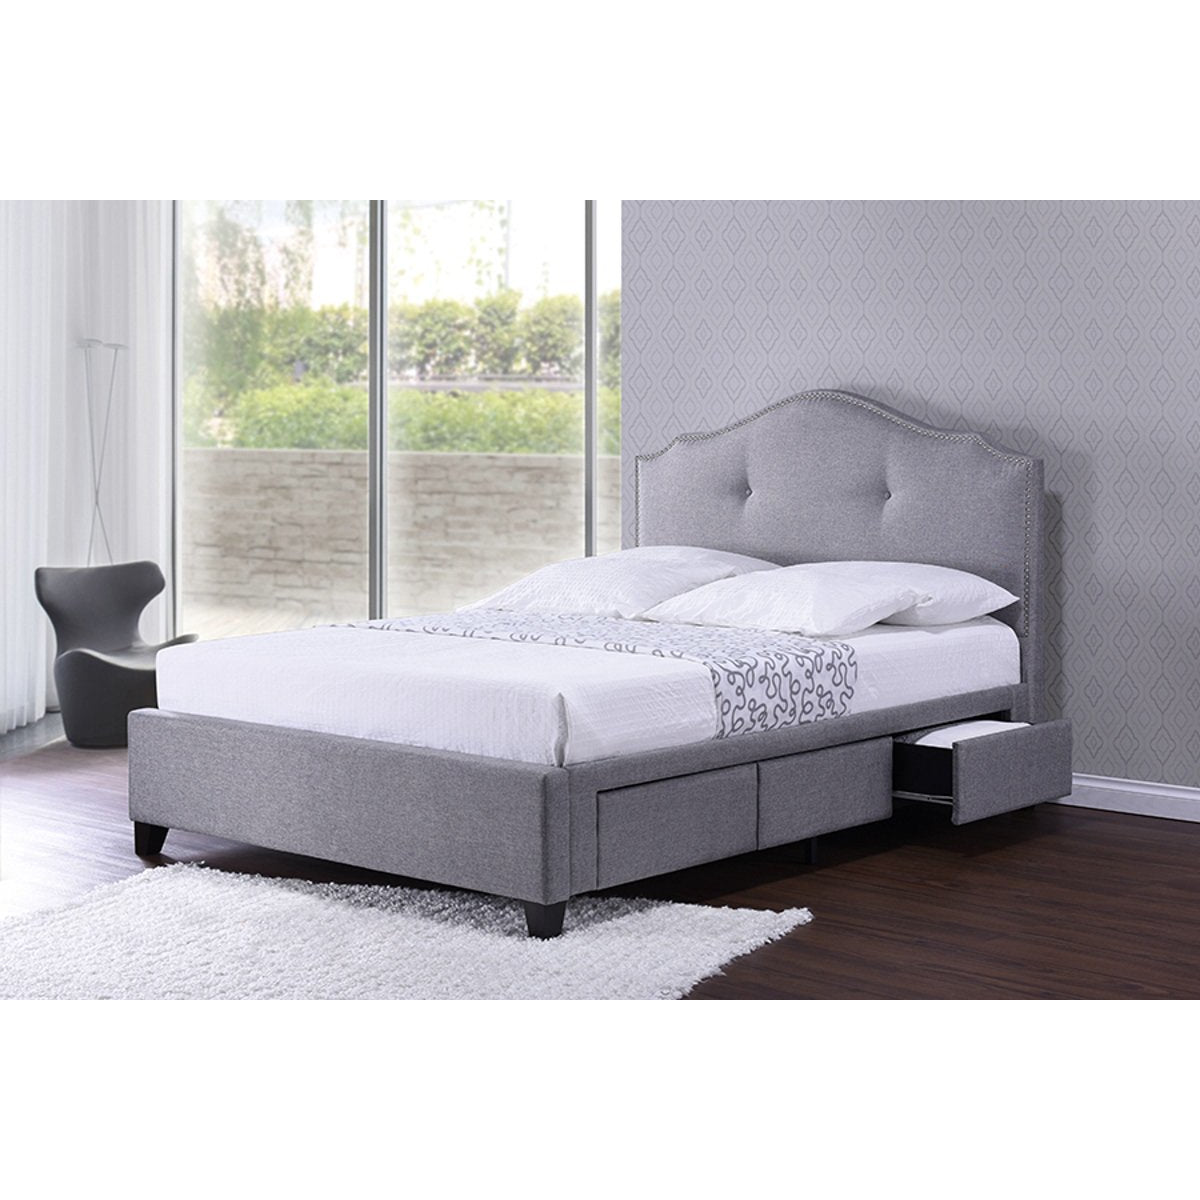 Baxton Studio Armeena Grey Linen Modern Storage Bed with Upholstered Headboard - Queen Size Baxton Studio-beds-Minimal And Modern - 5